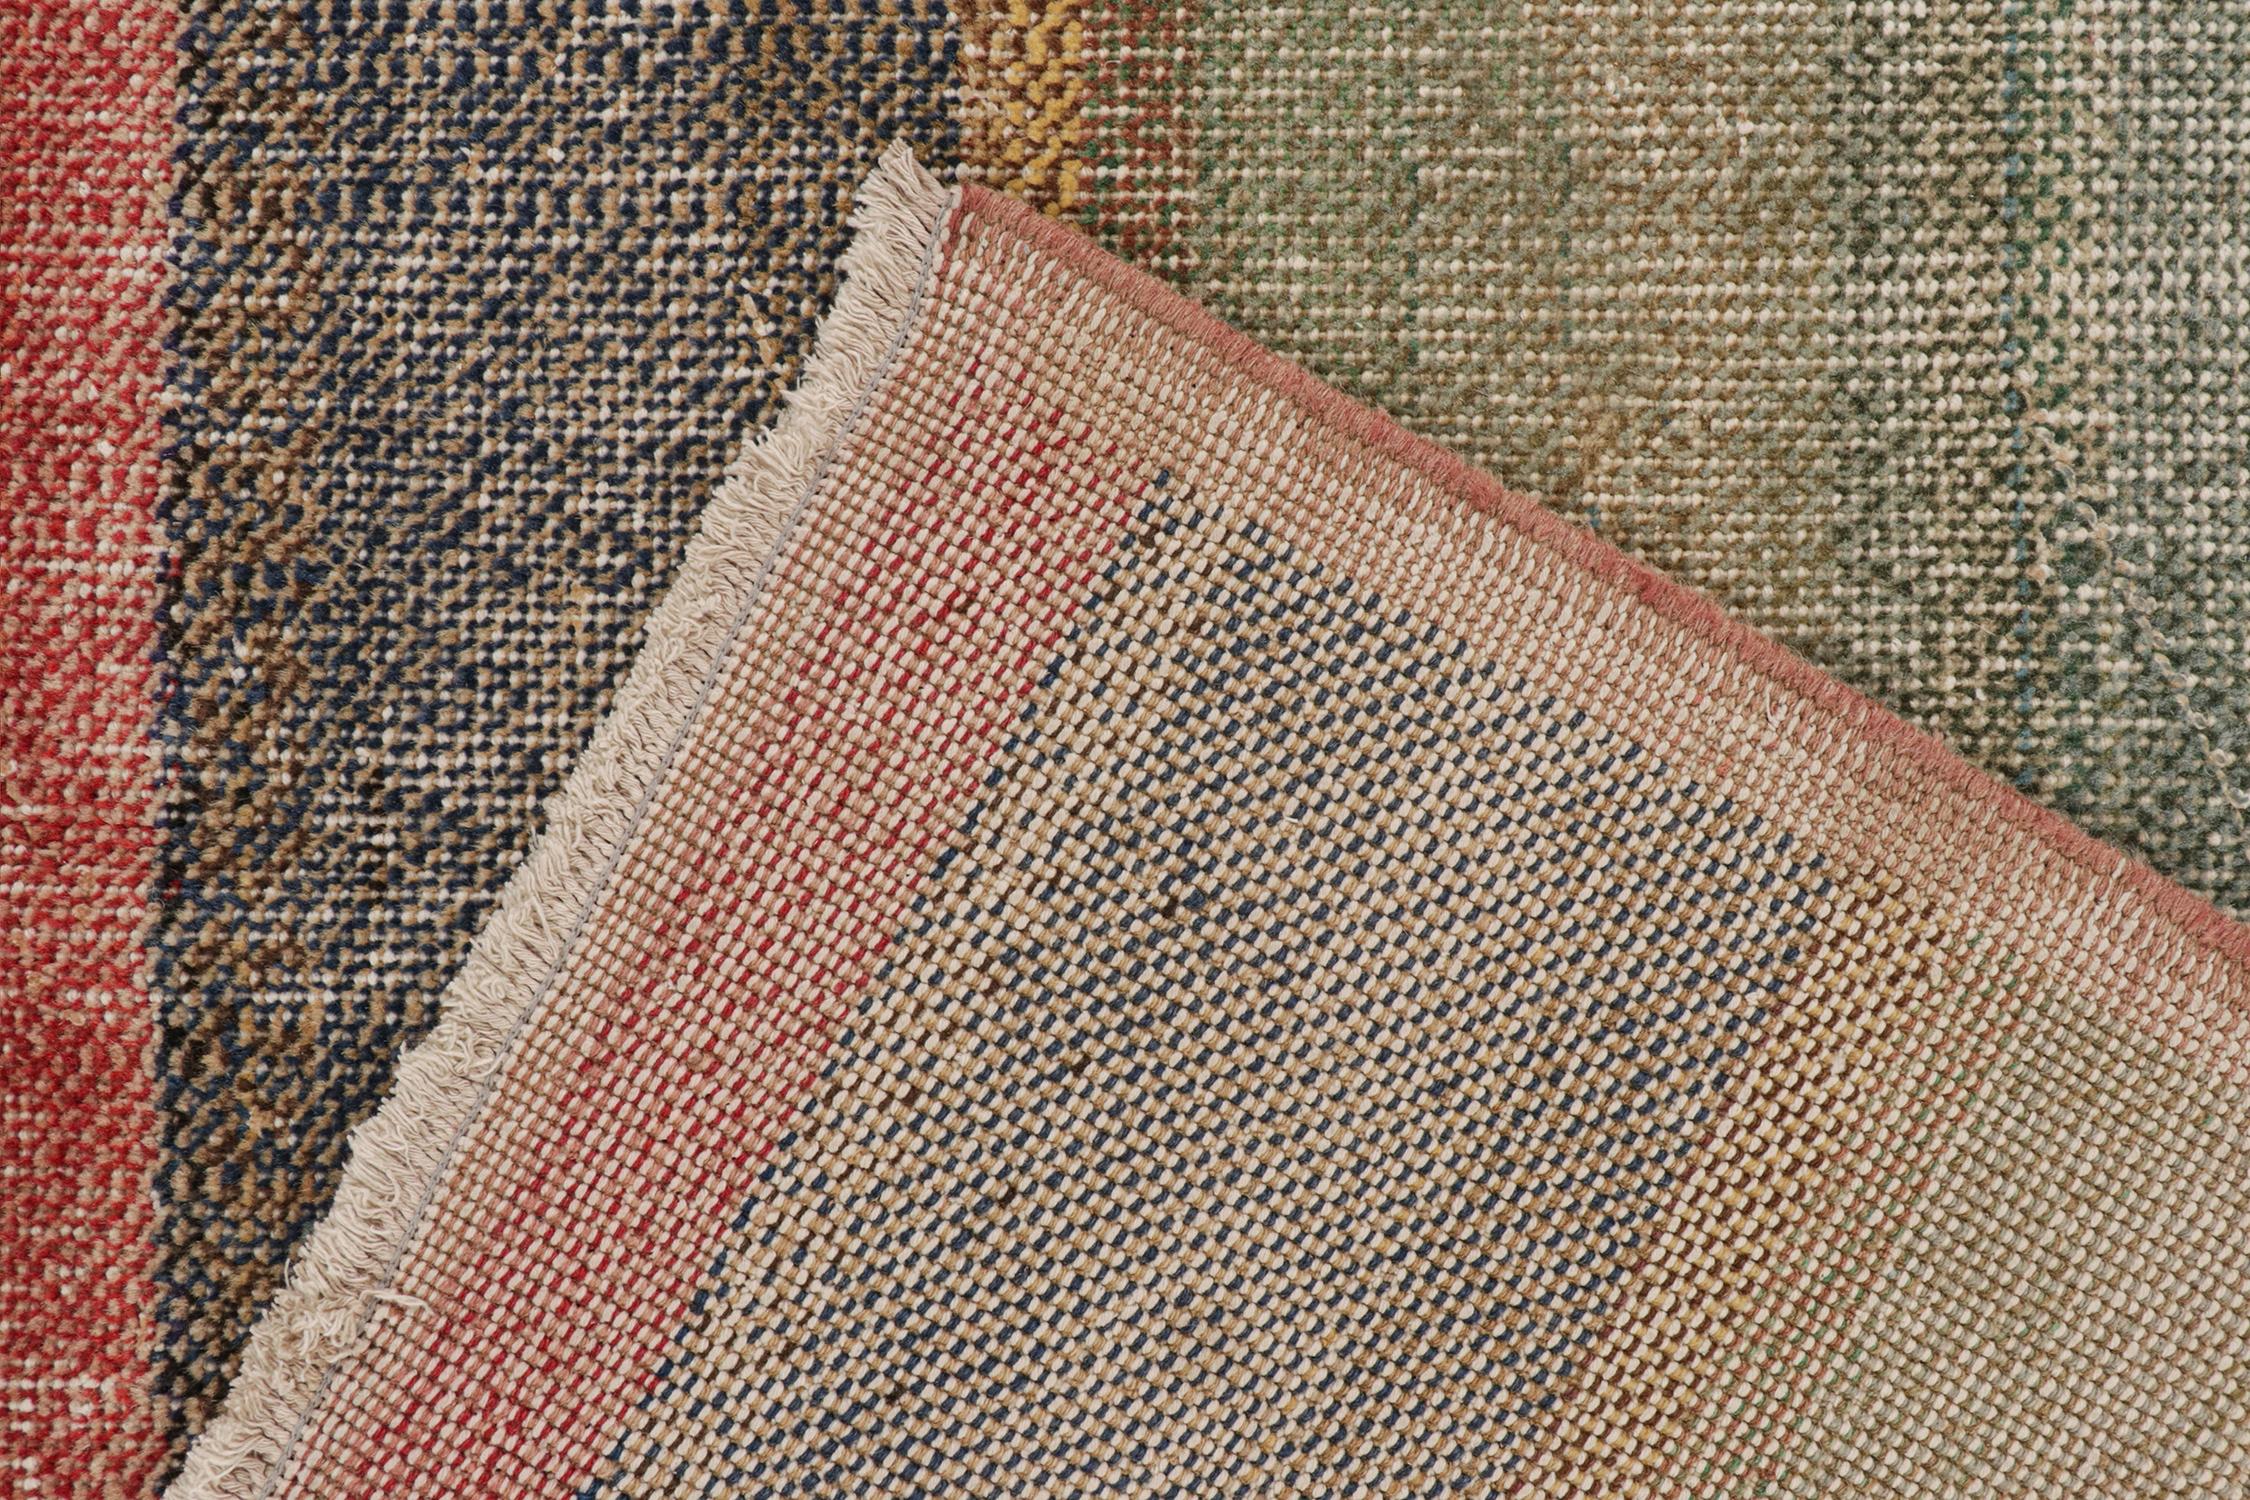 Wool Vintage Zeki Müren Rug in Polychromatic Stripes by Rug & Kilim